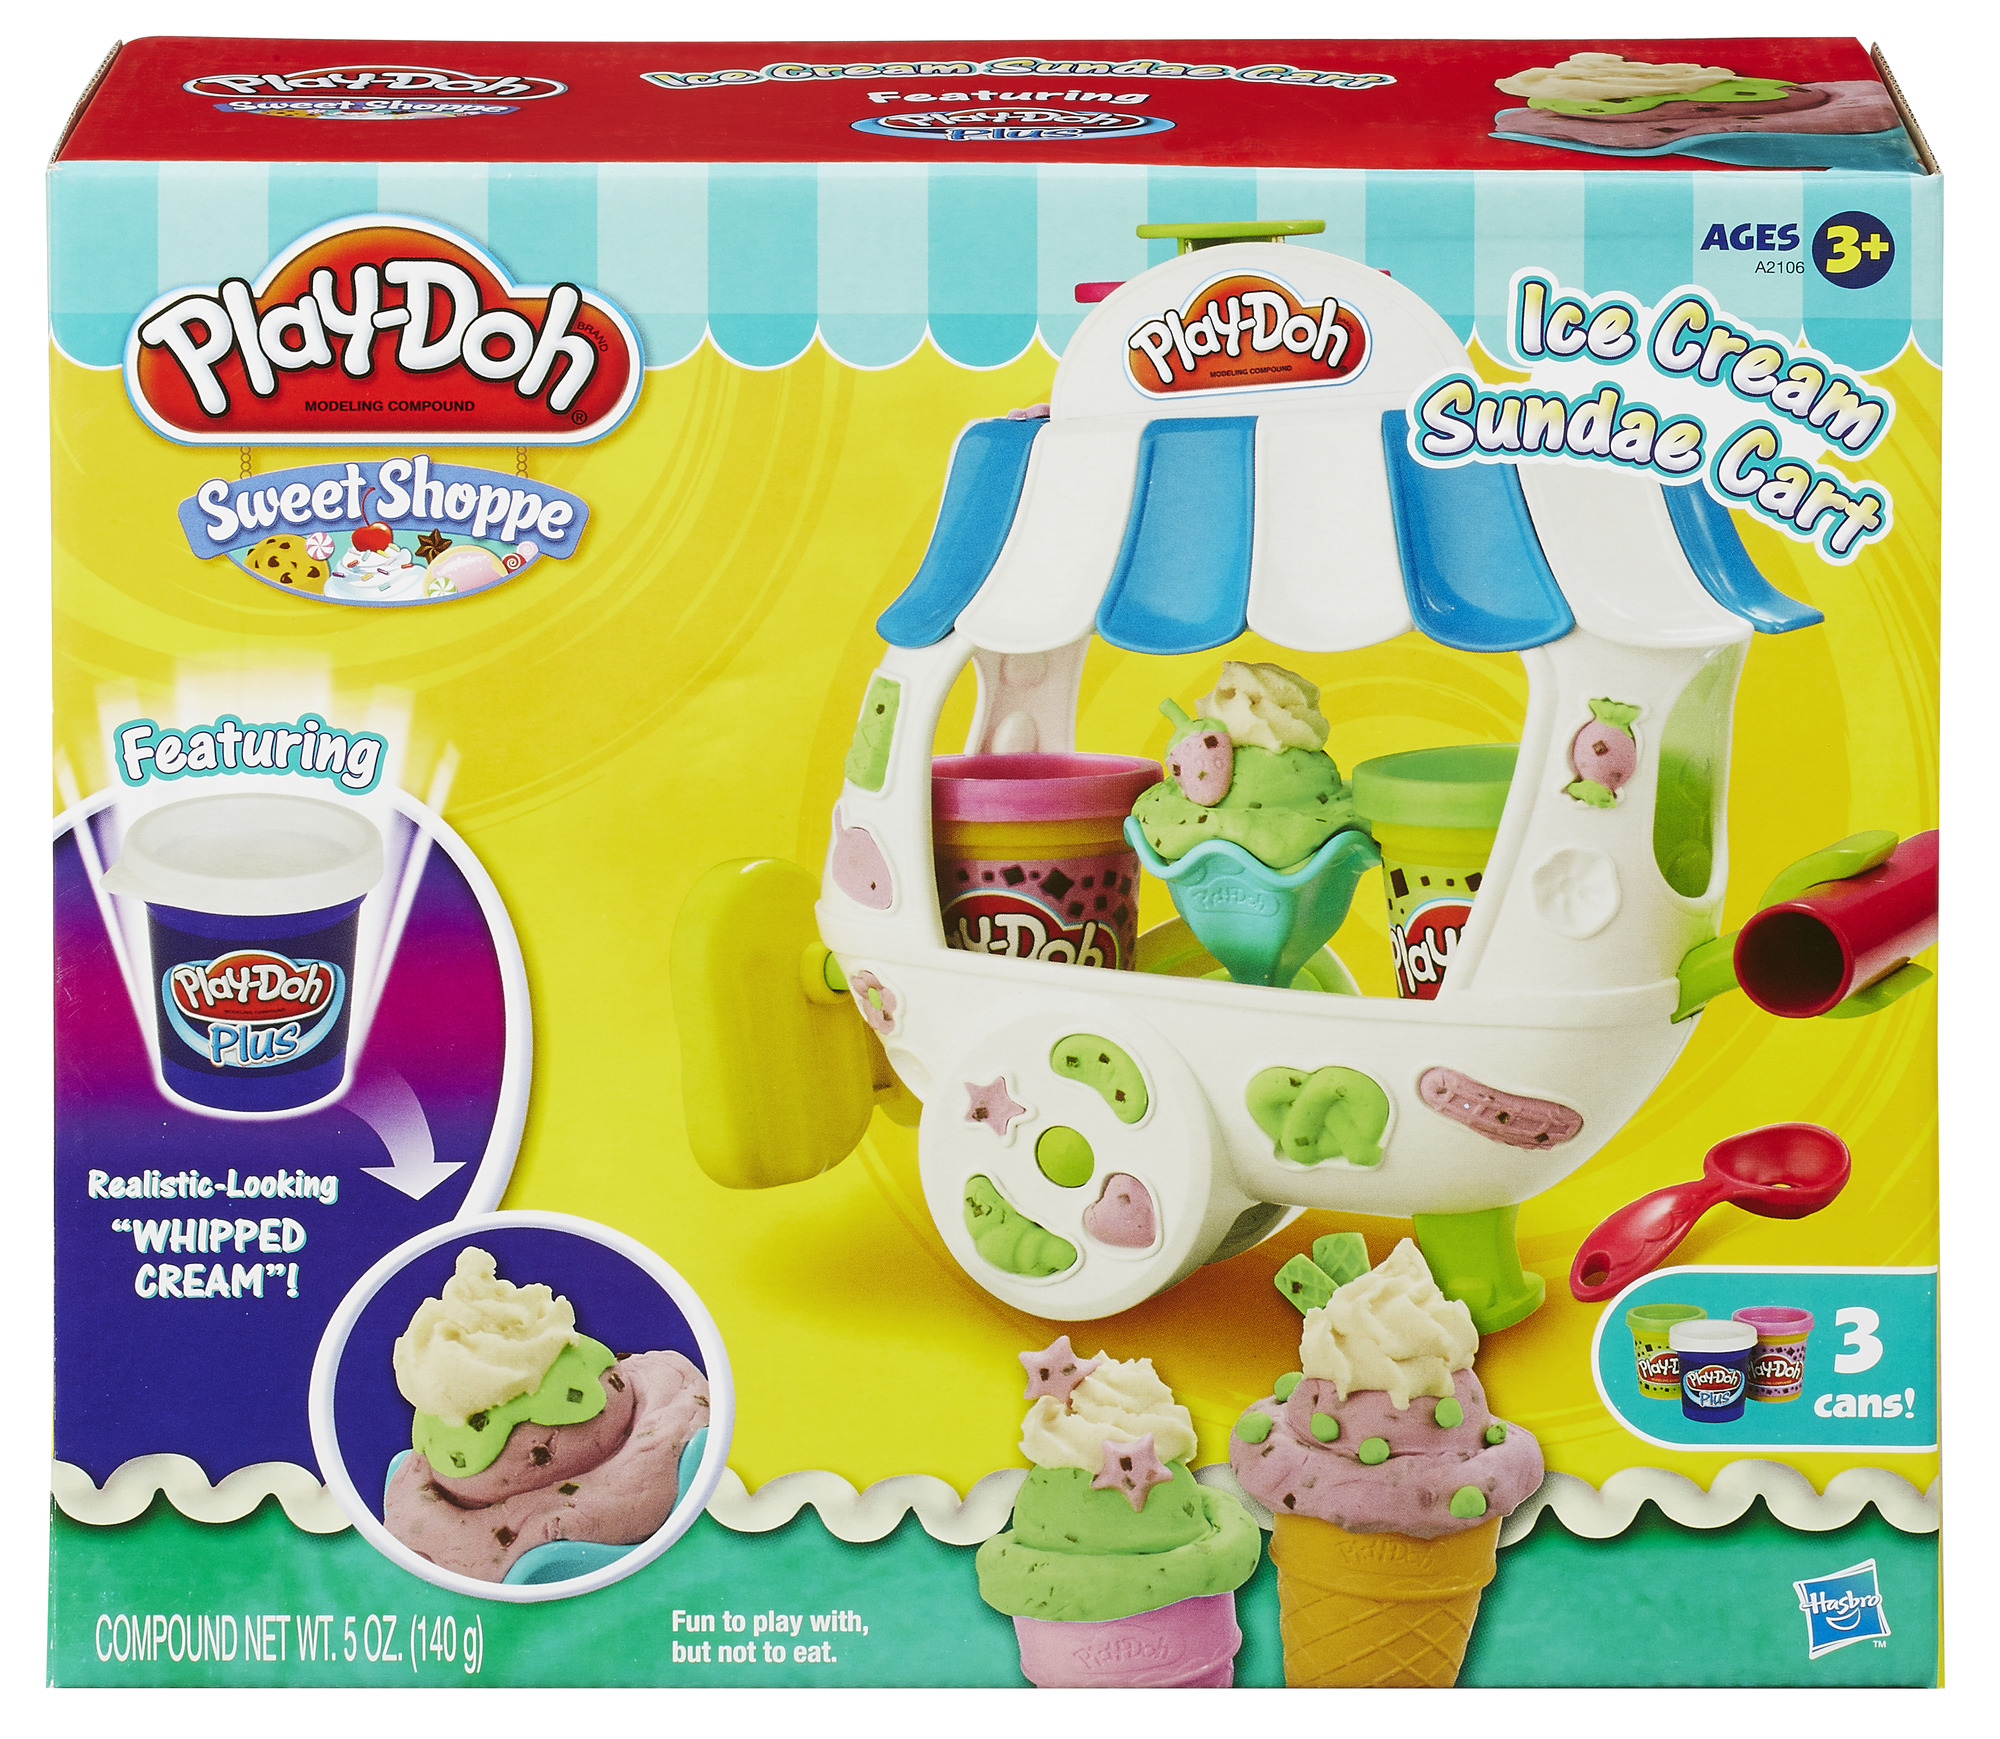 Play-Doh 15 Piece Sweet Shoppe Sundae Cart Plastic Play Food Set, Ice Cream (Multi-color) - image 2 of 3